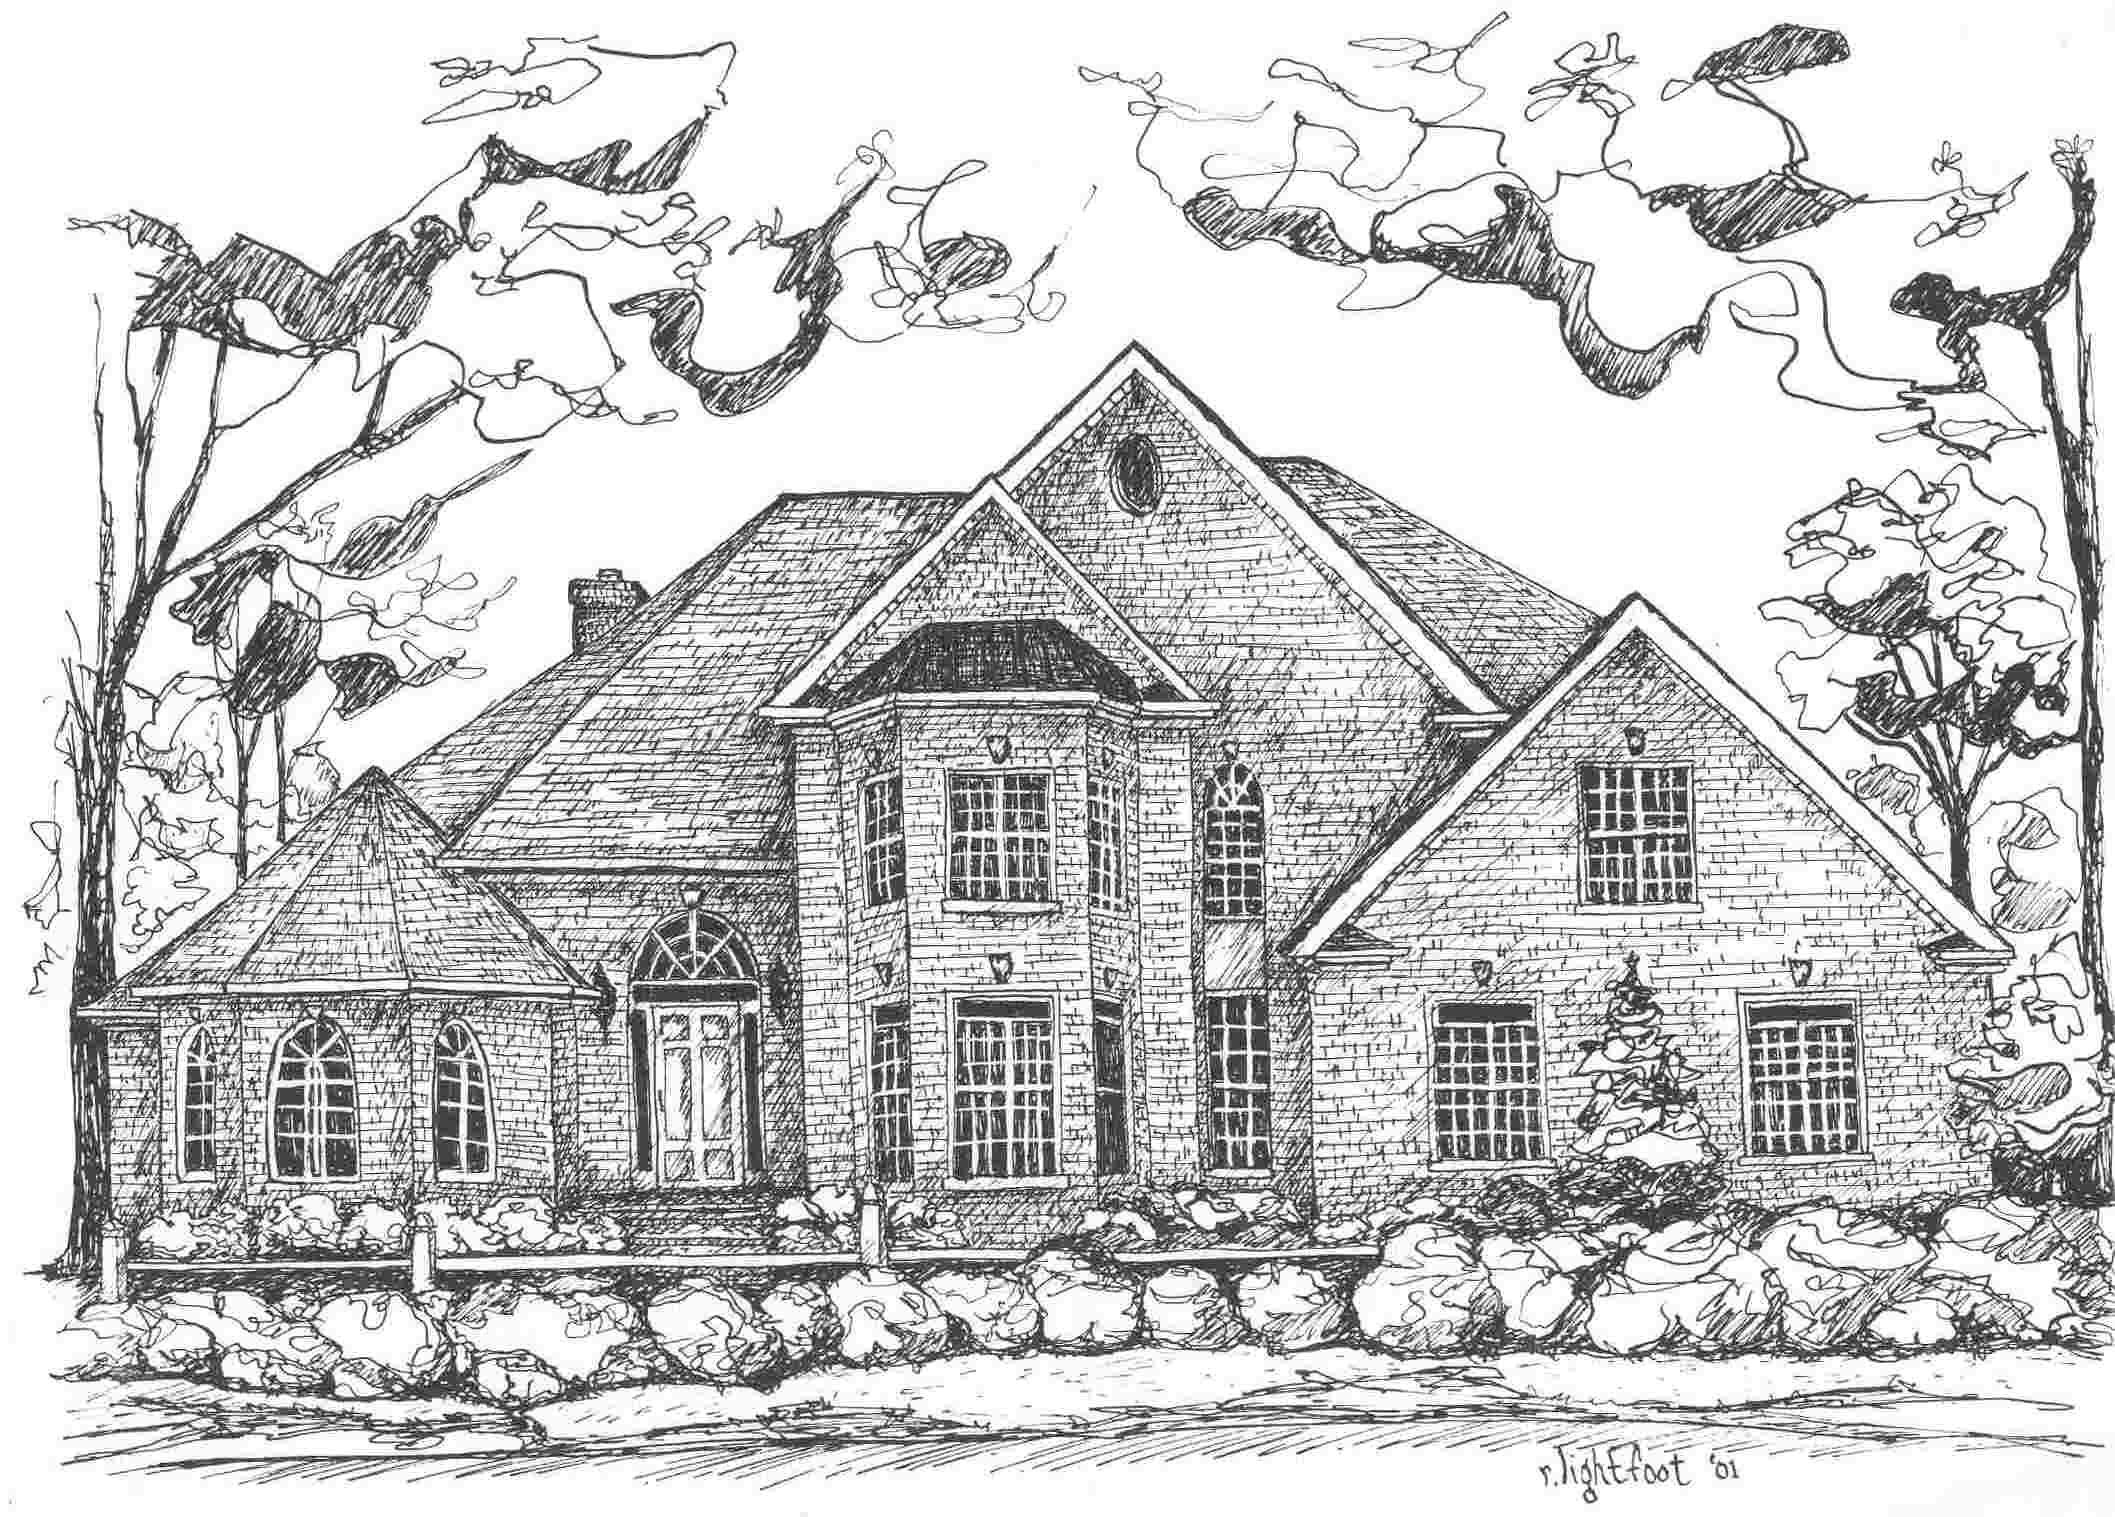 easy house sketch